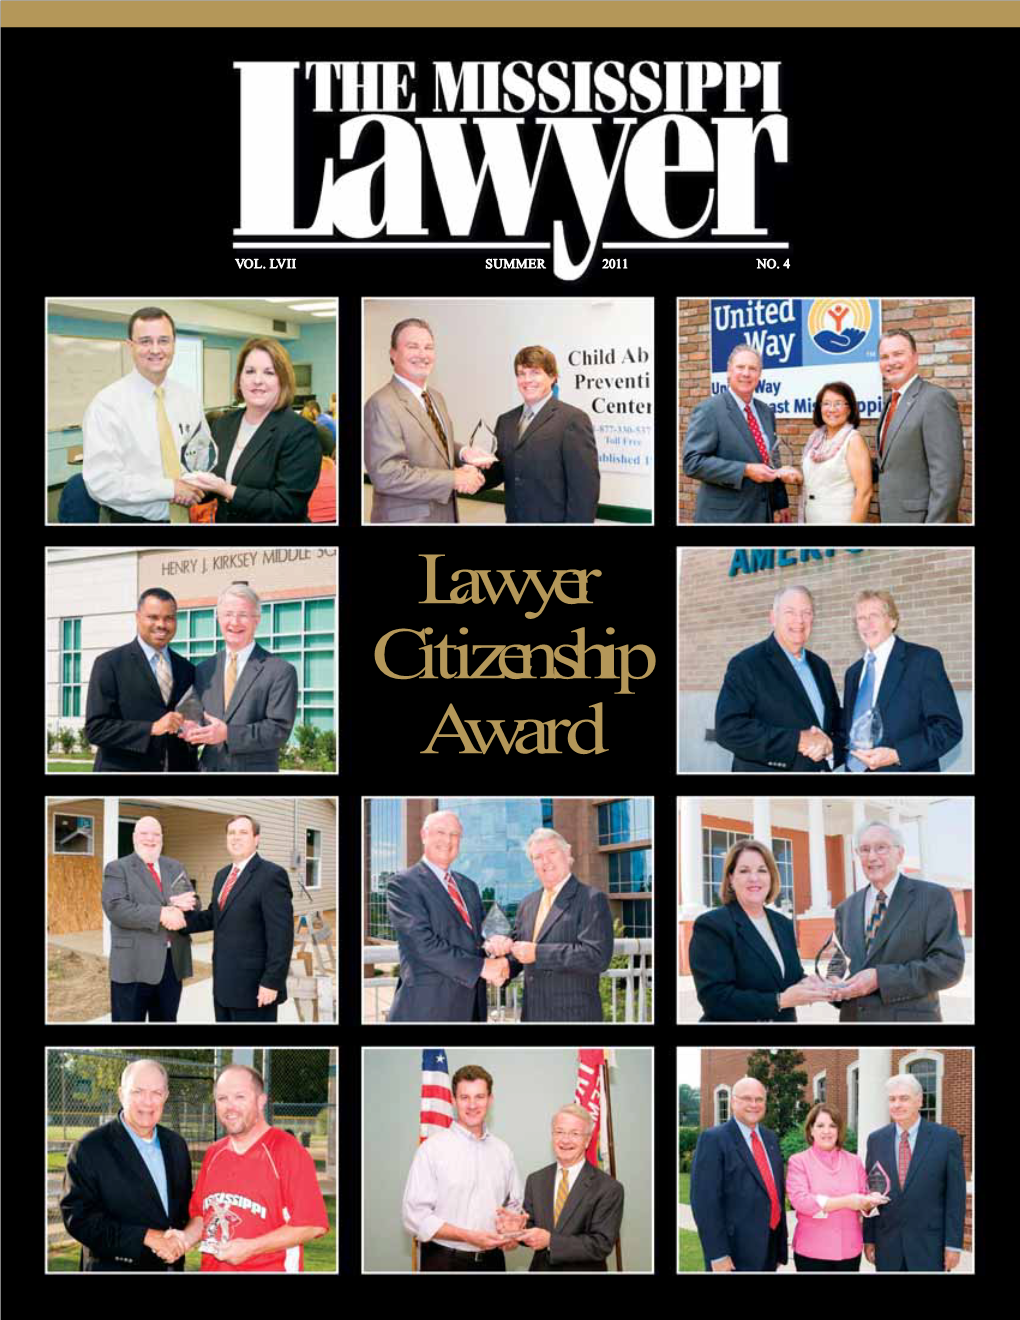 Lawyer Citizenship Award